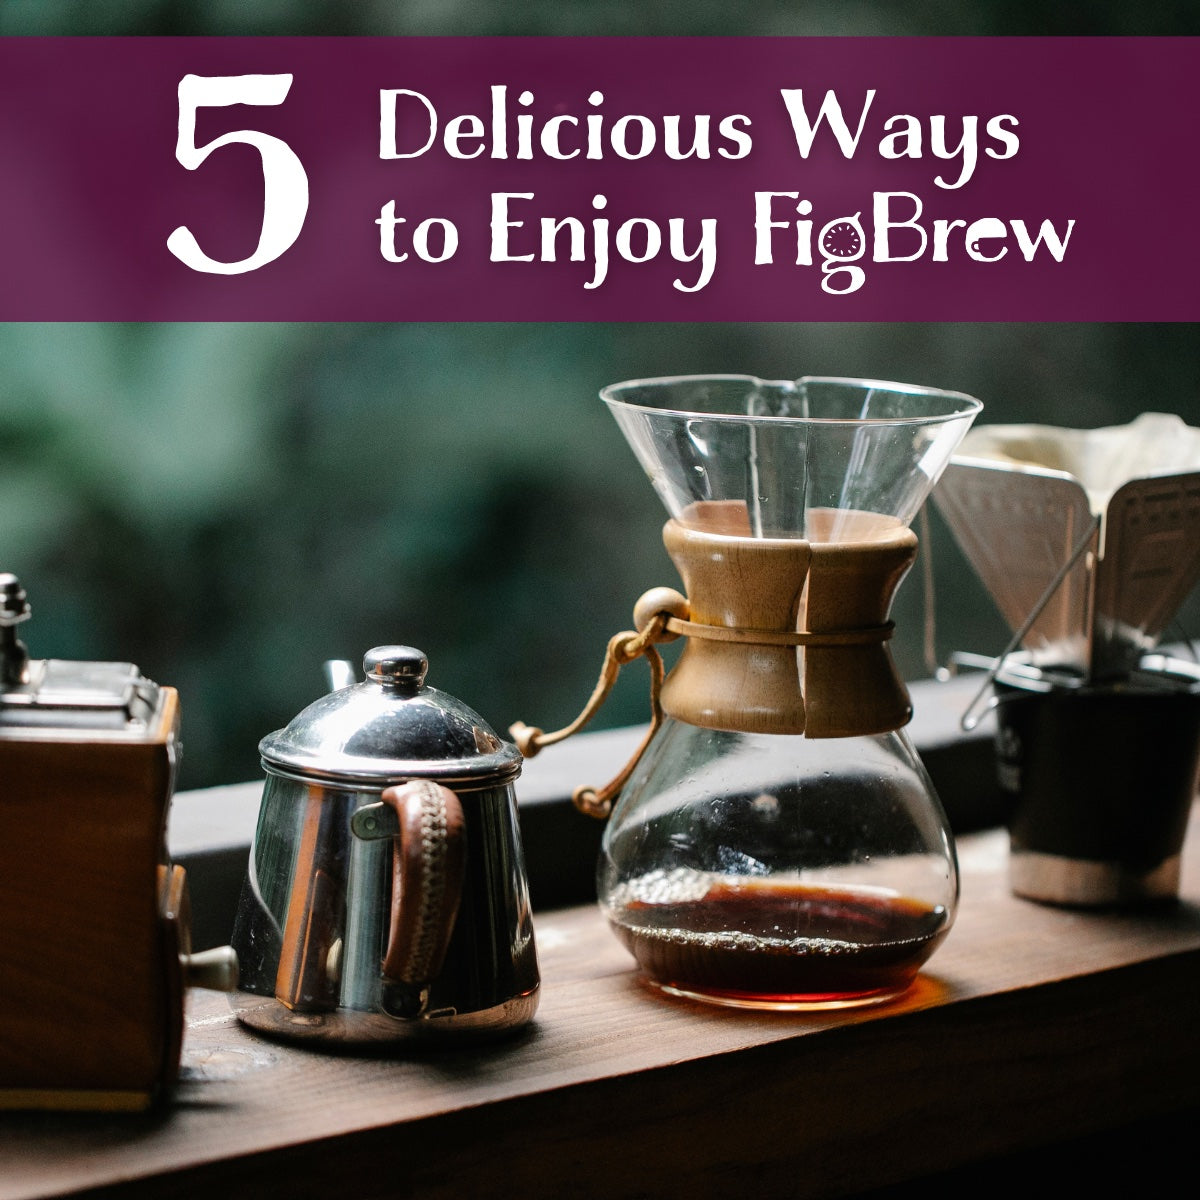 5 Delicious Ways to Enjoy FigBrew